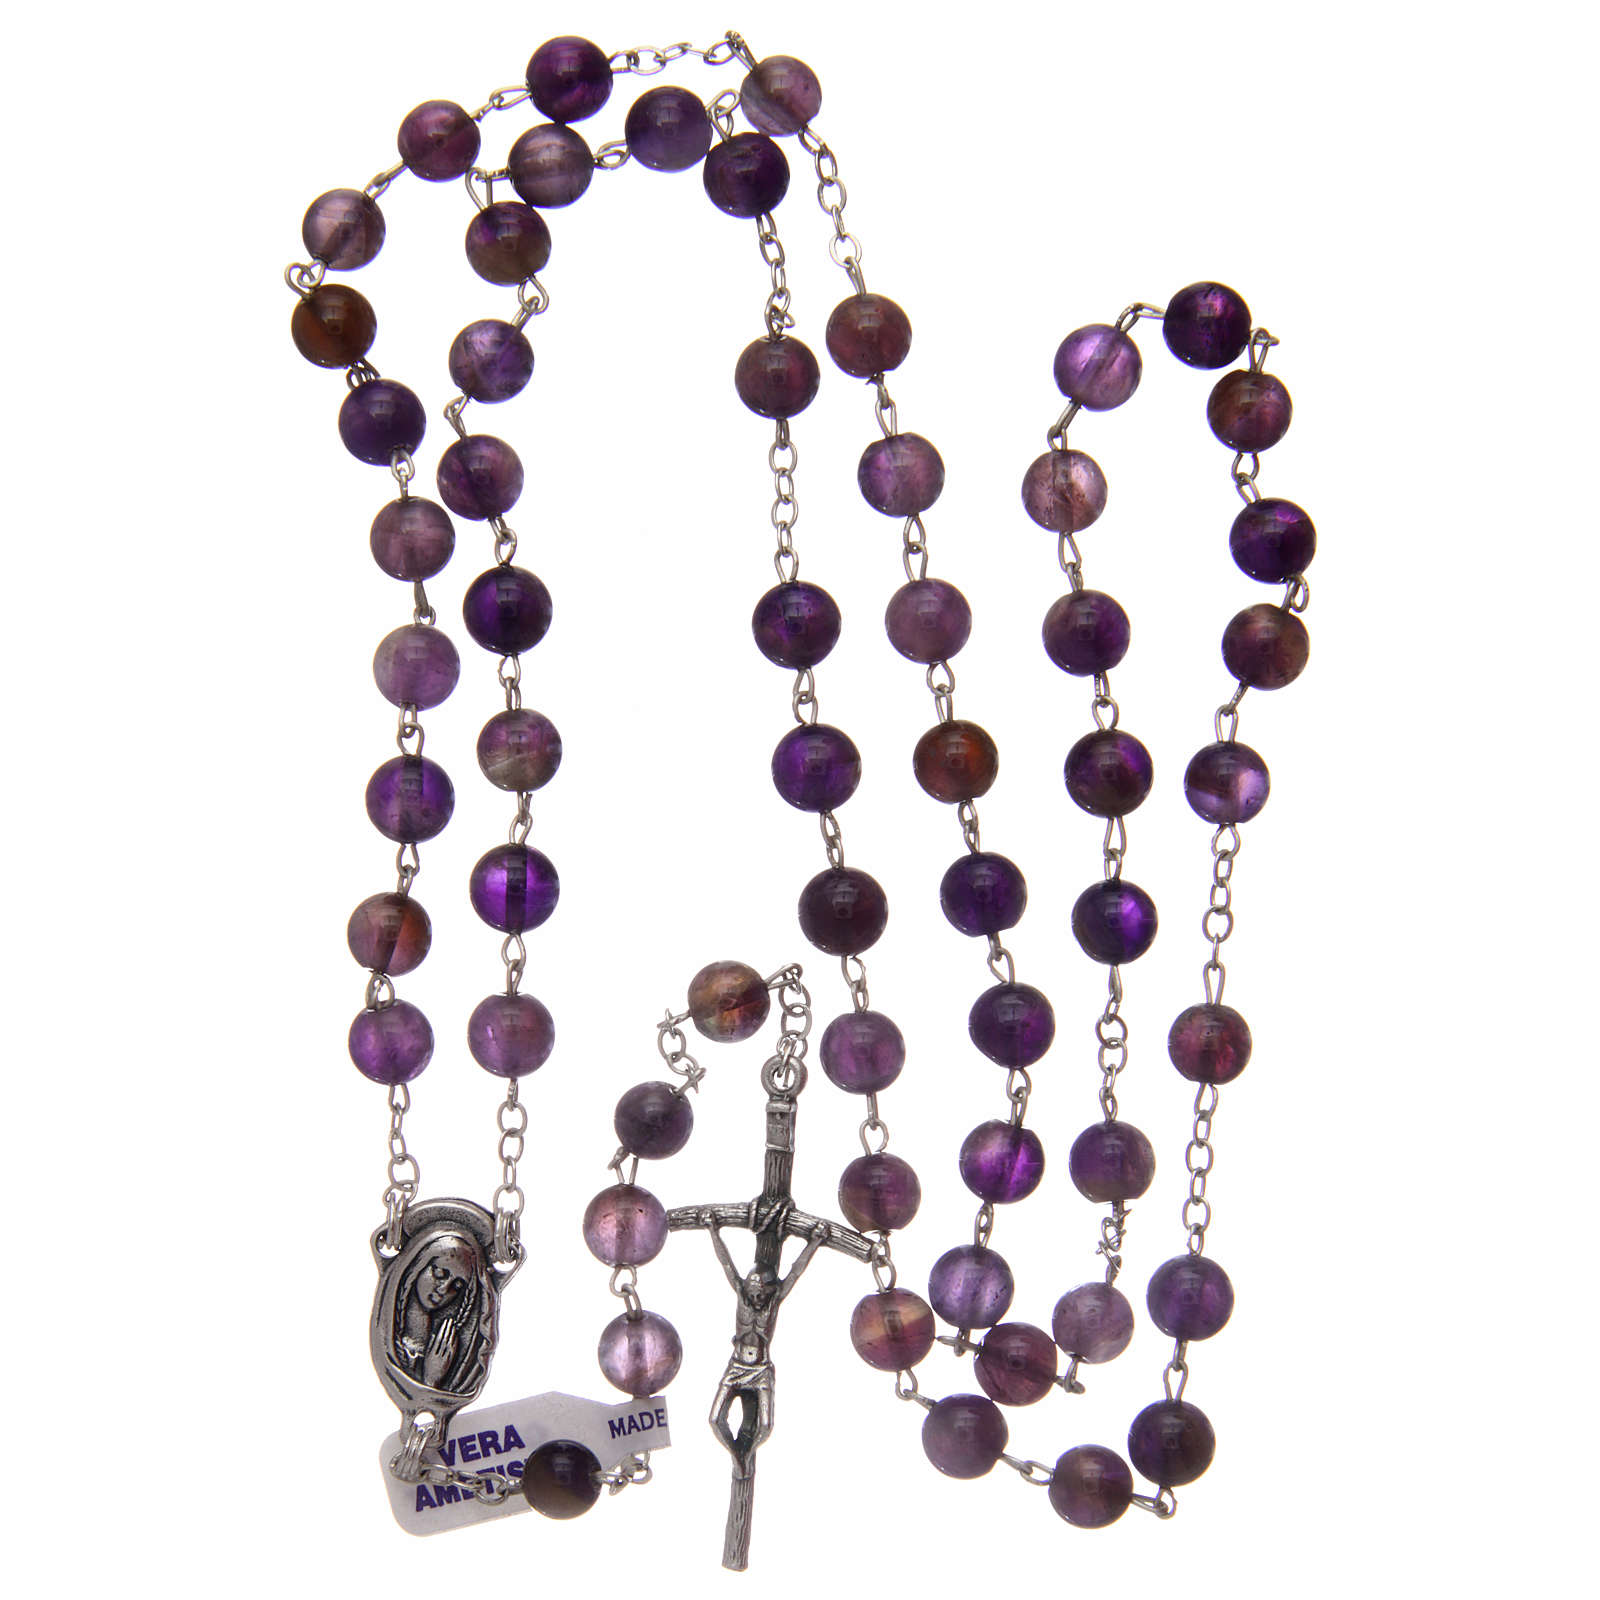 Amethyst rosary beads 7 mm | online sales on HOLYART.com